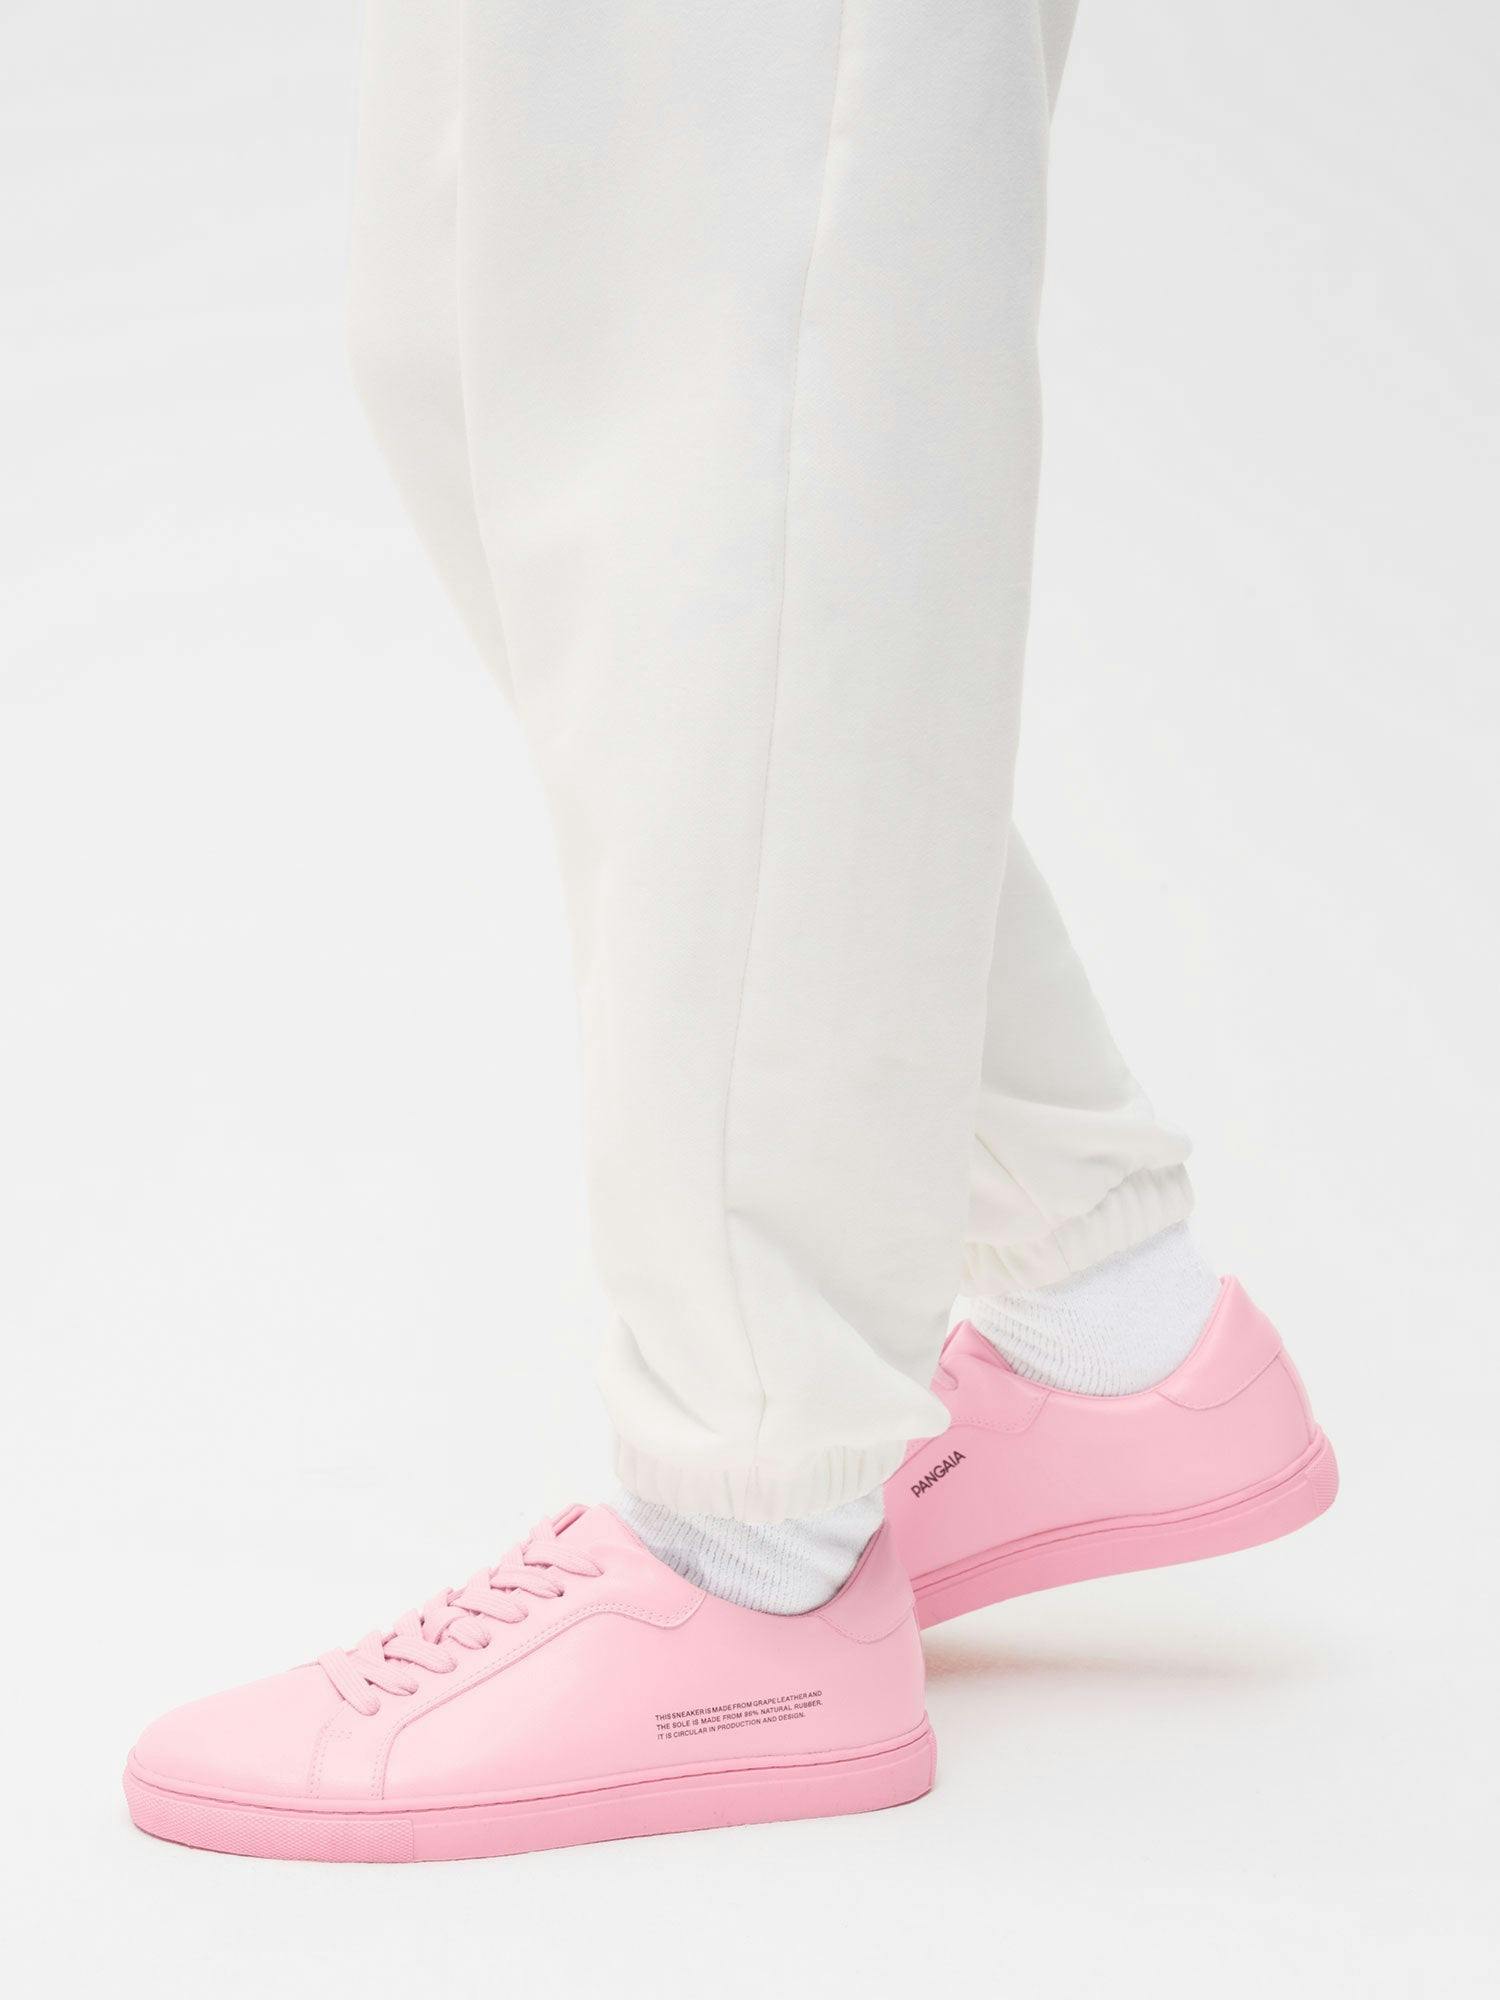 https://cdn.shopify.com/s/files/1/0035/1309/0115/products/Grape-Leather-Sneakers-Sakura-Pink-Female-1.jpg?v=1686668992